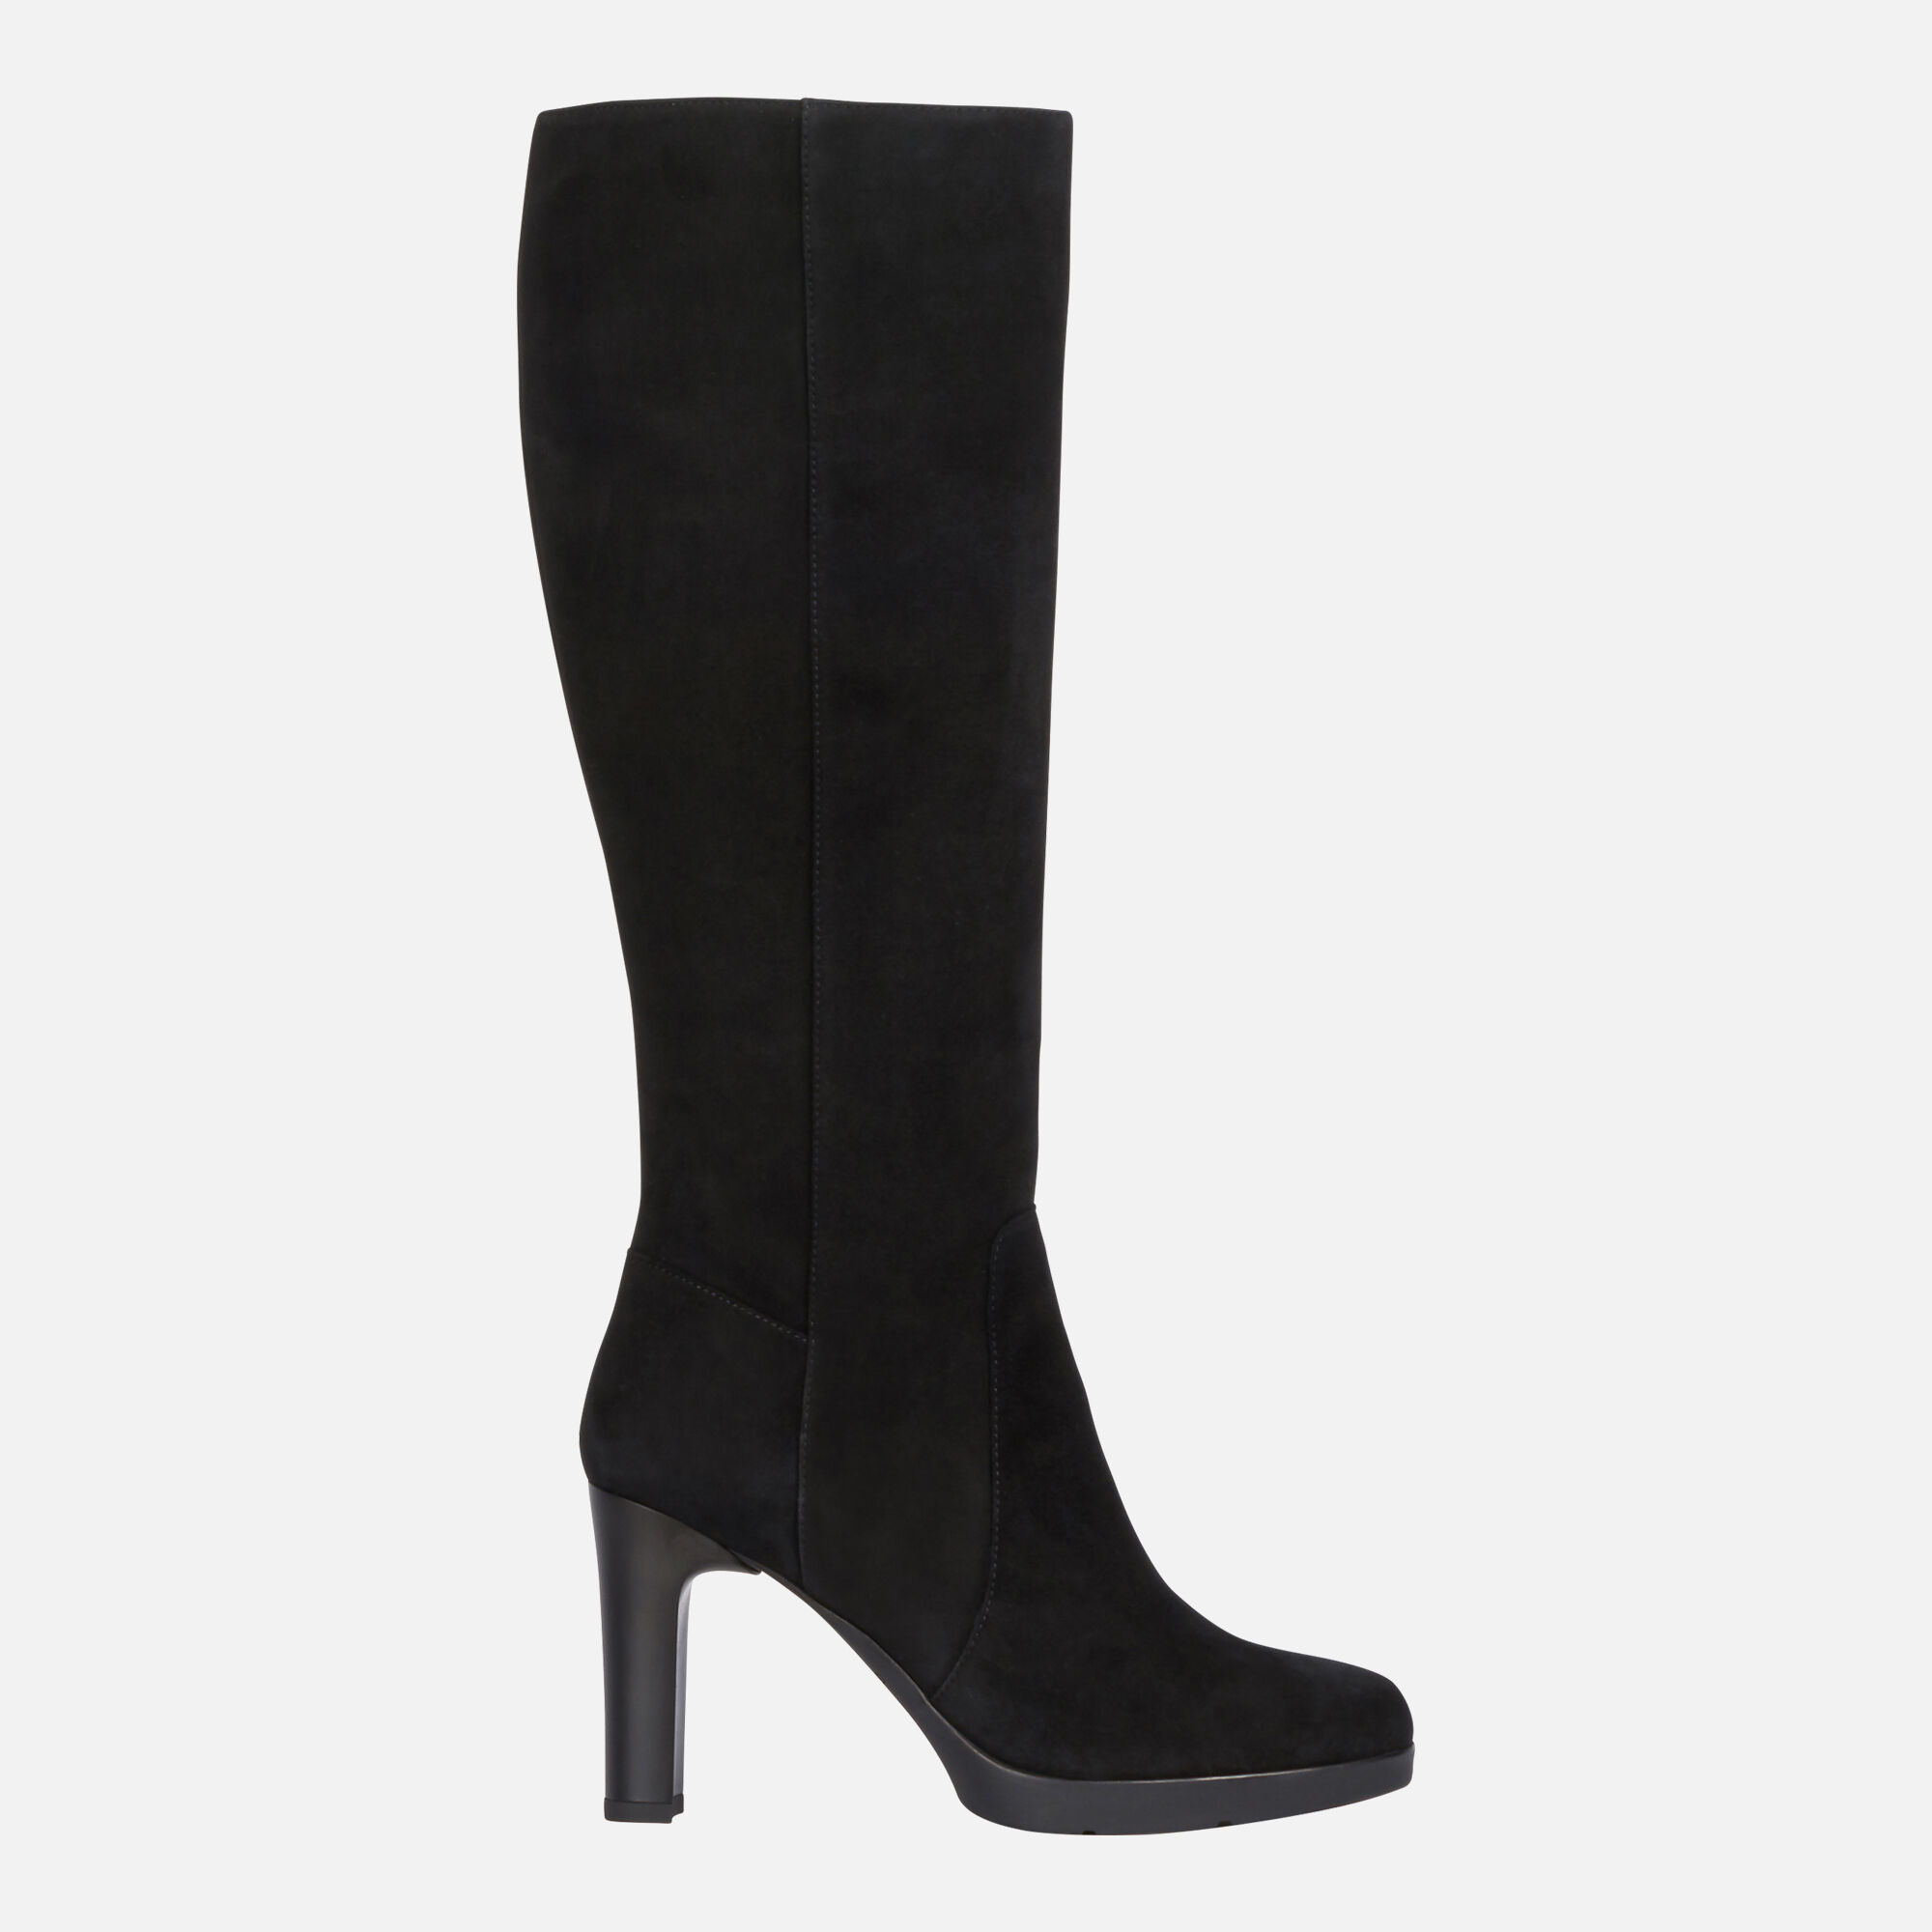 Geox ANNYA HIGH Woman: Black Boots 